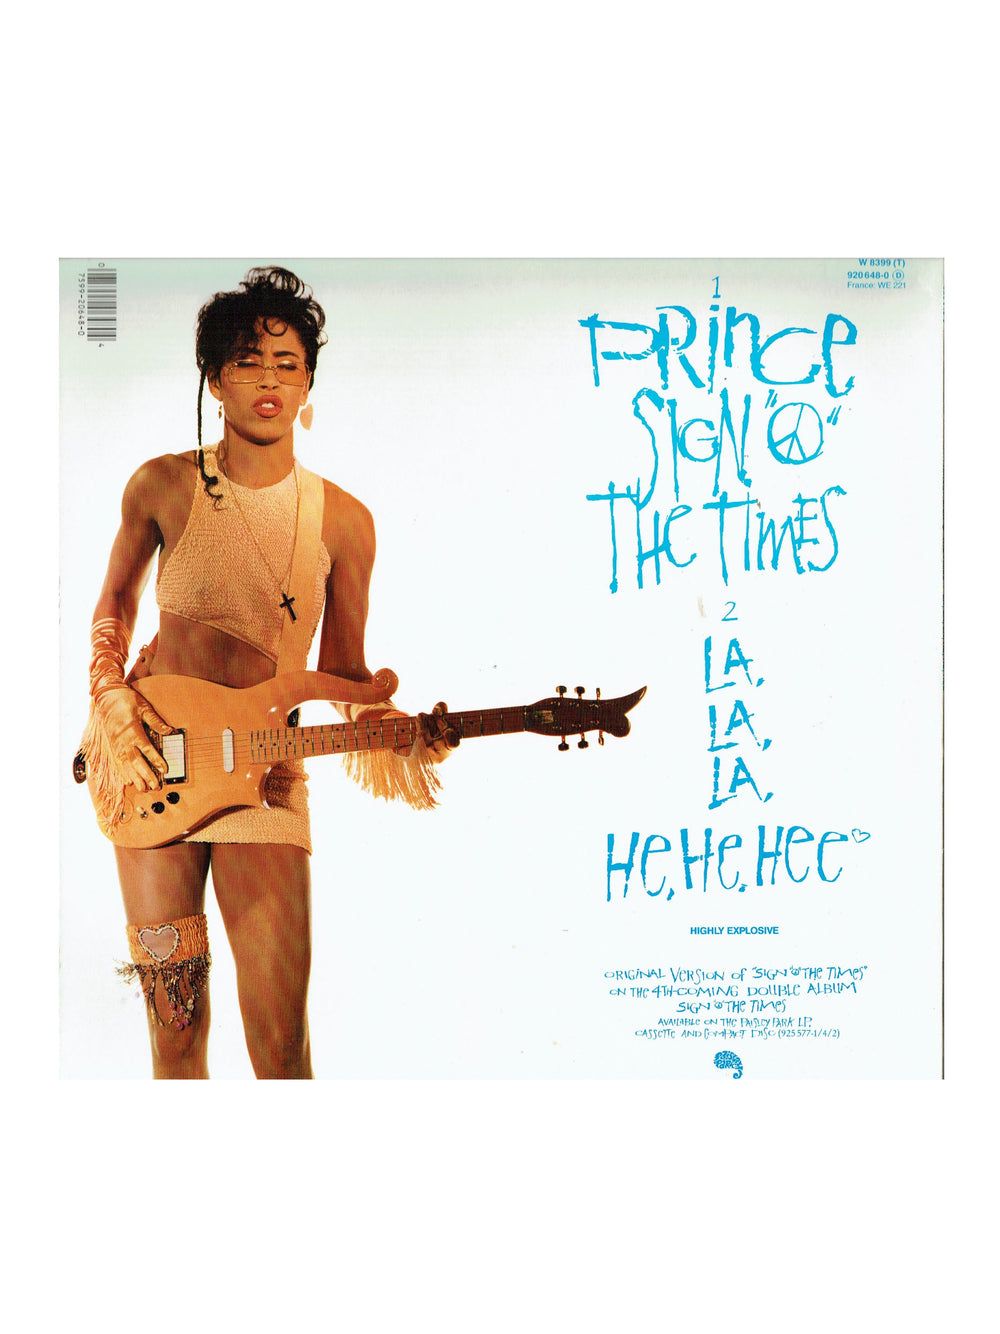 Prince – Sign O The Times 12 Inch Vinyl 1987 EU Release 2 Tracks